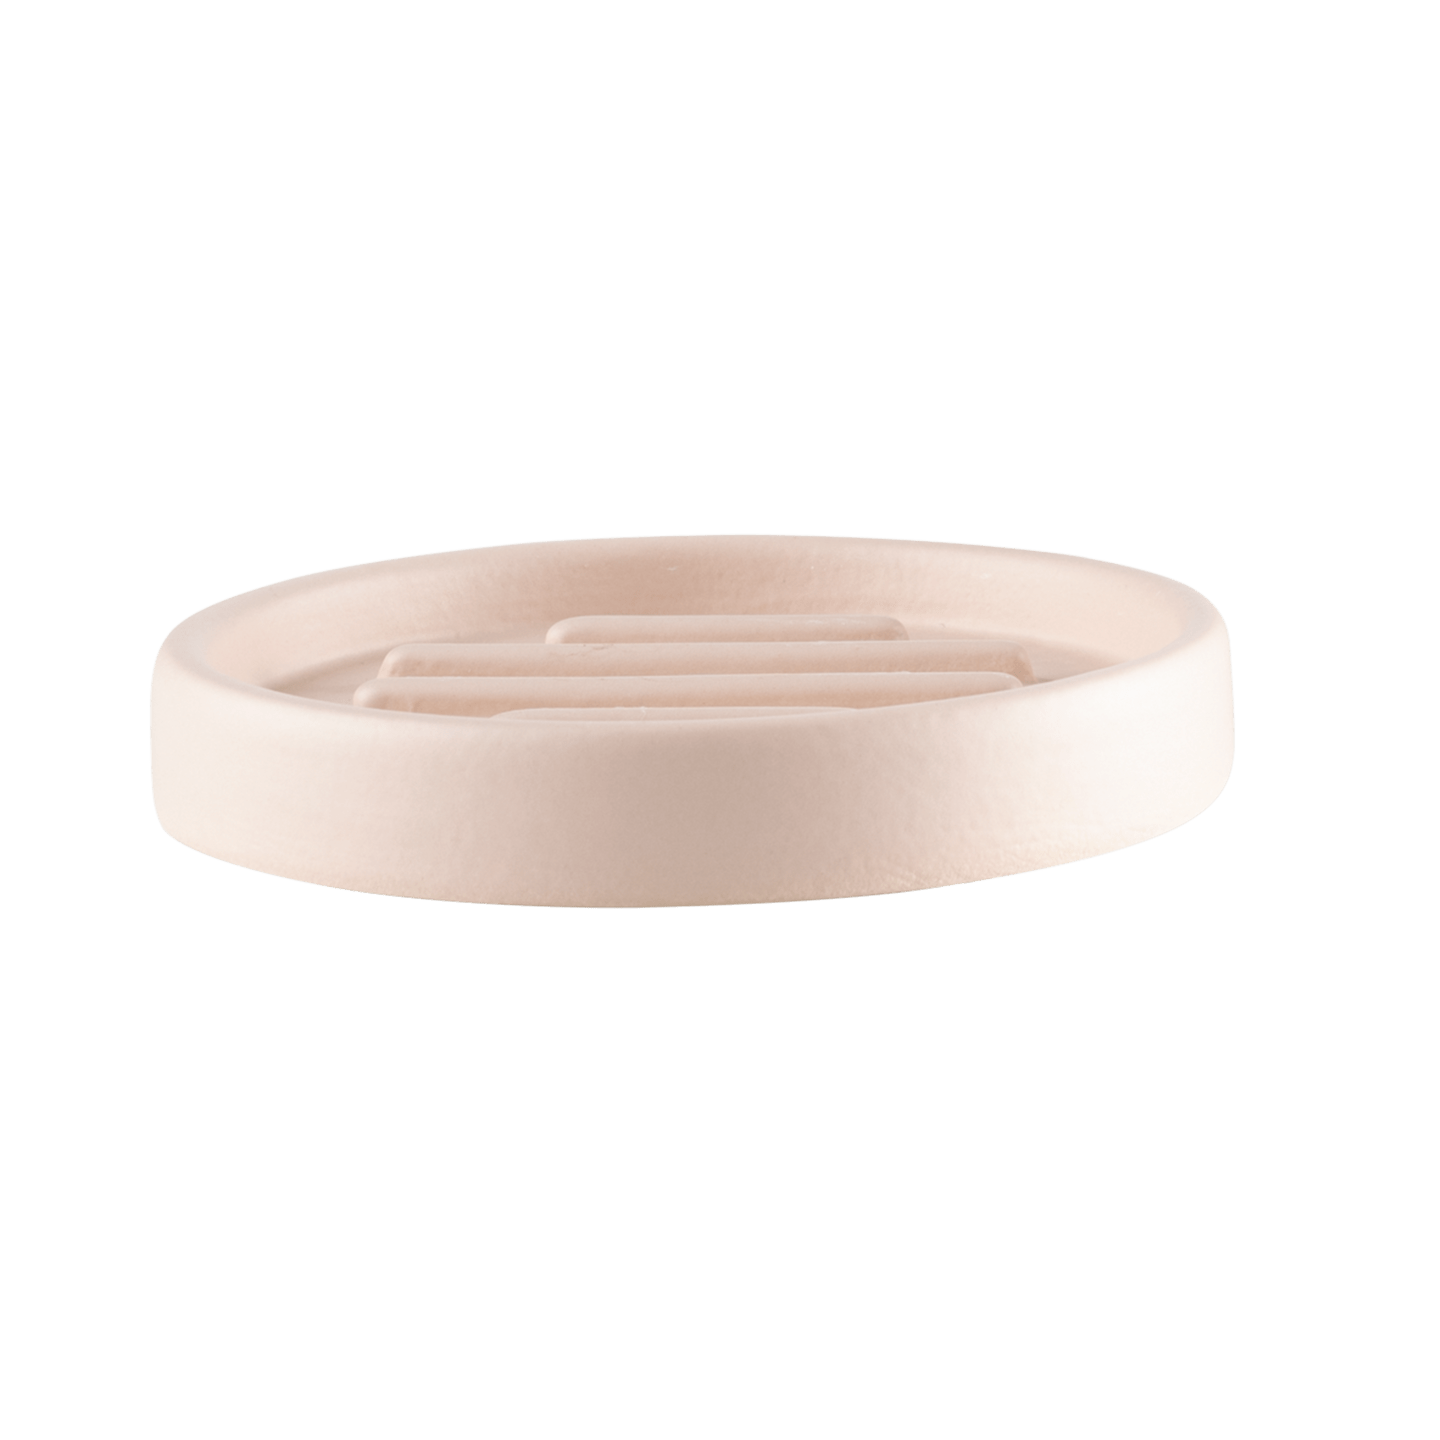 RUCK - Keramik-Seifenschale, handgefertigt, Ø 12 cm in rosa